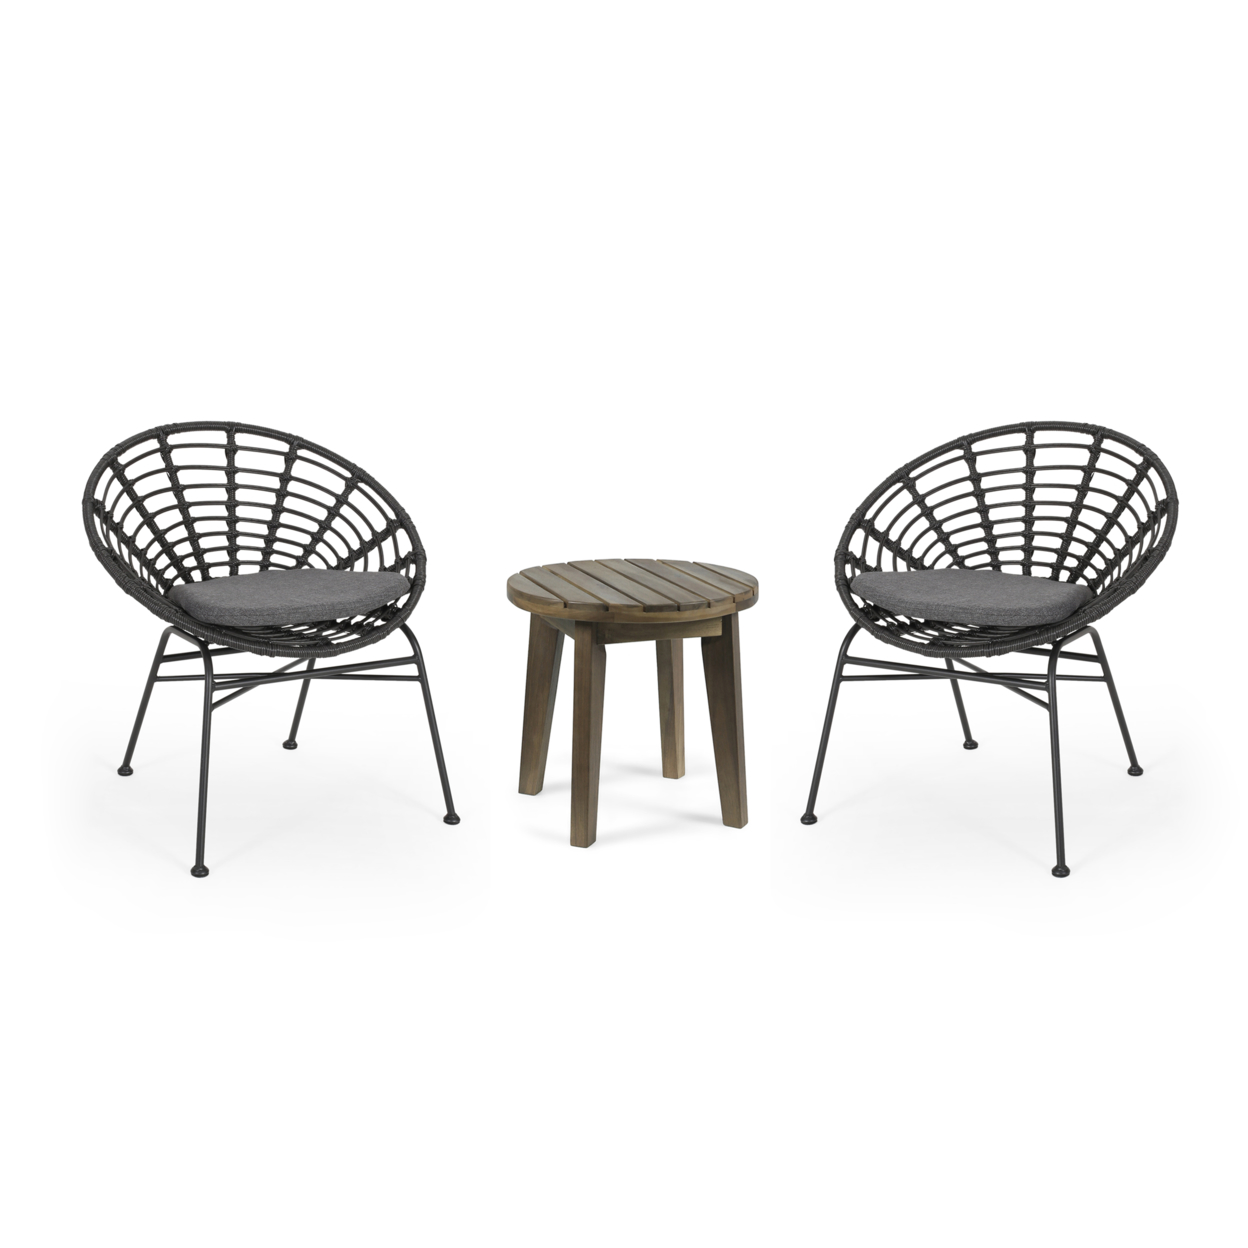 Heloise Outdoor 2 Seater Acacia Wood Chat Set - Gray, Dark Gray, Gray Finish